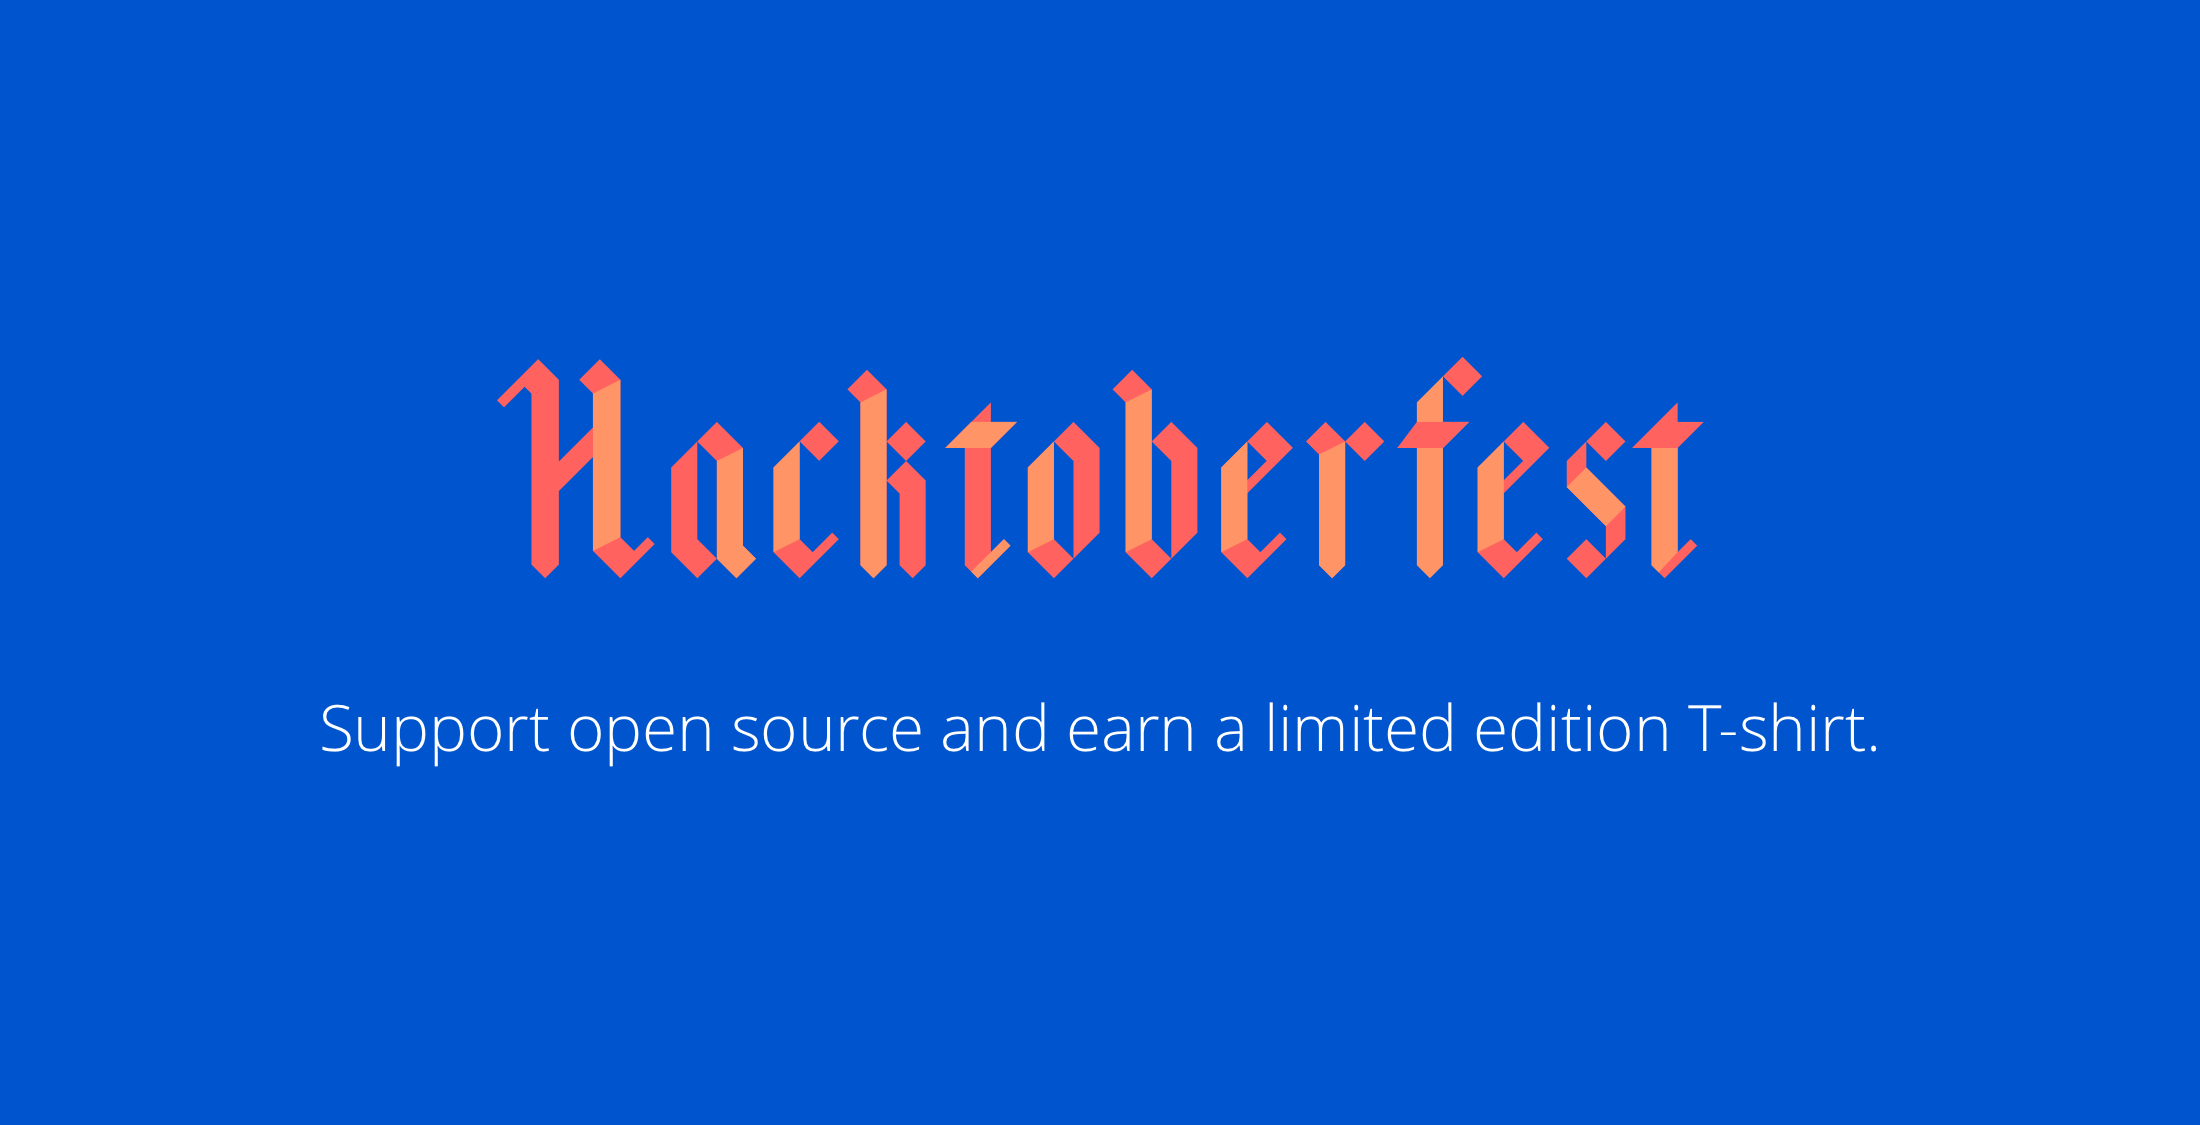 Hacktoberfest 2017 image